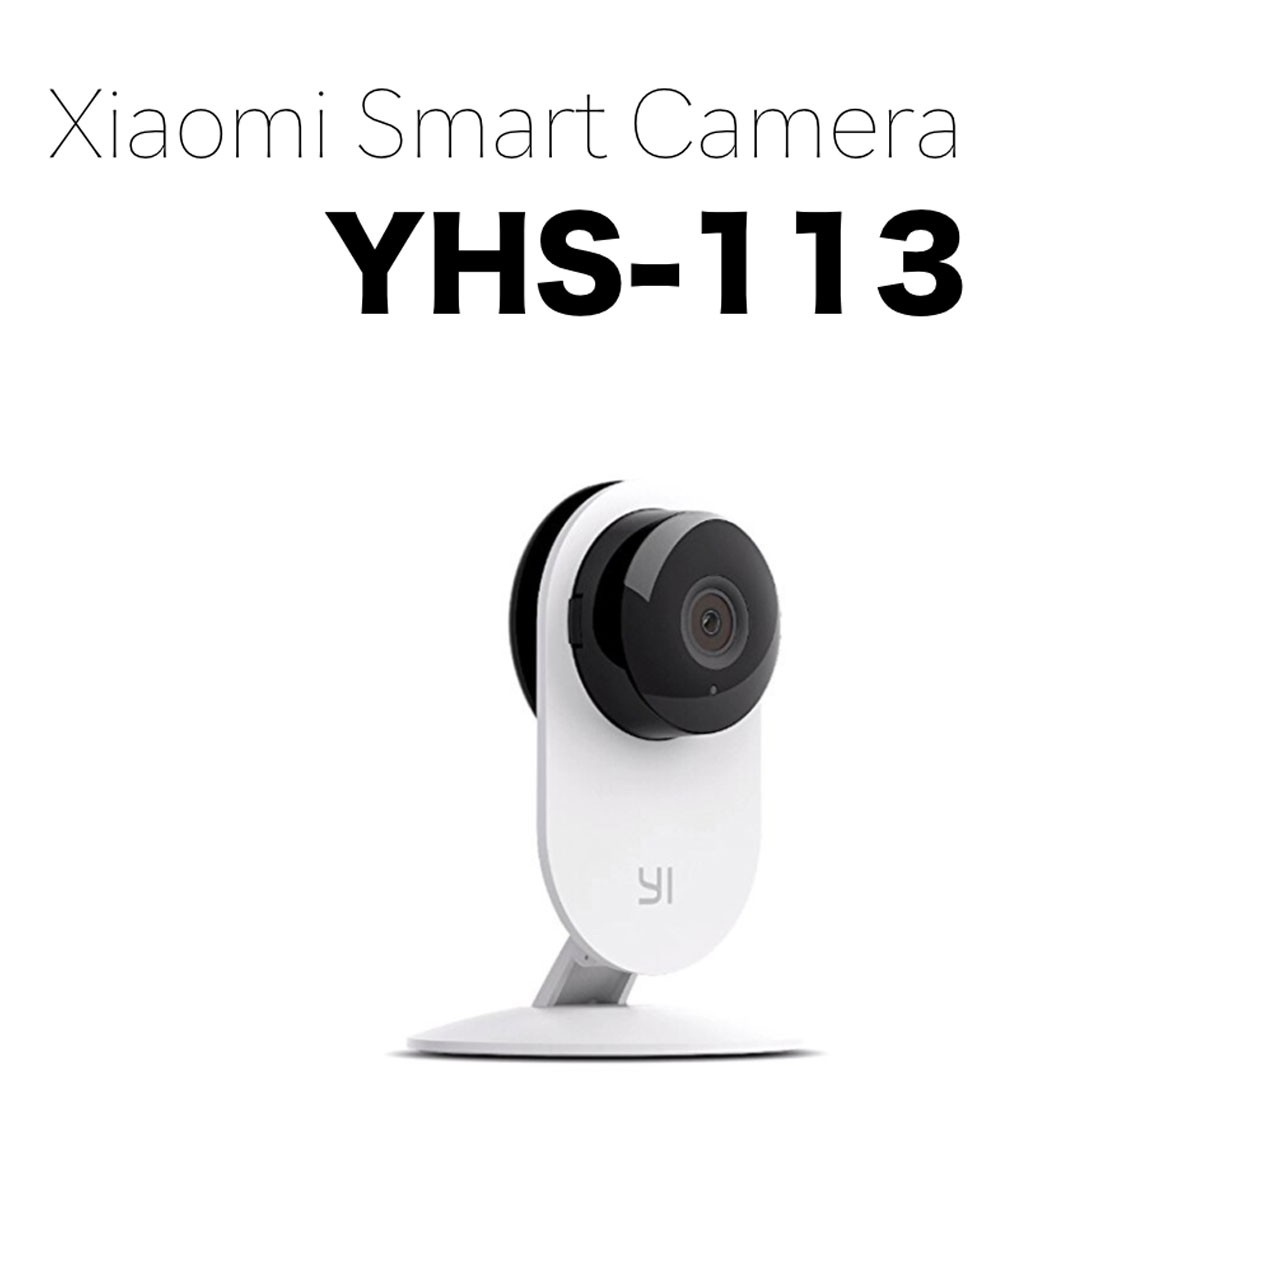 دوربین تحت شبکه برند شیاومی مدل Yi YHS-113